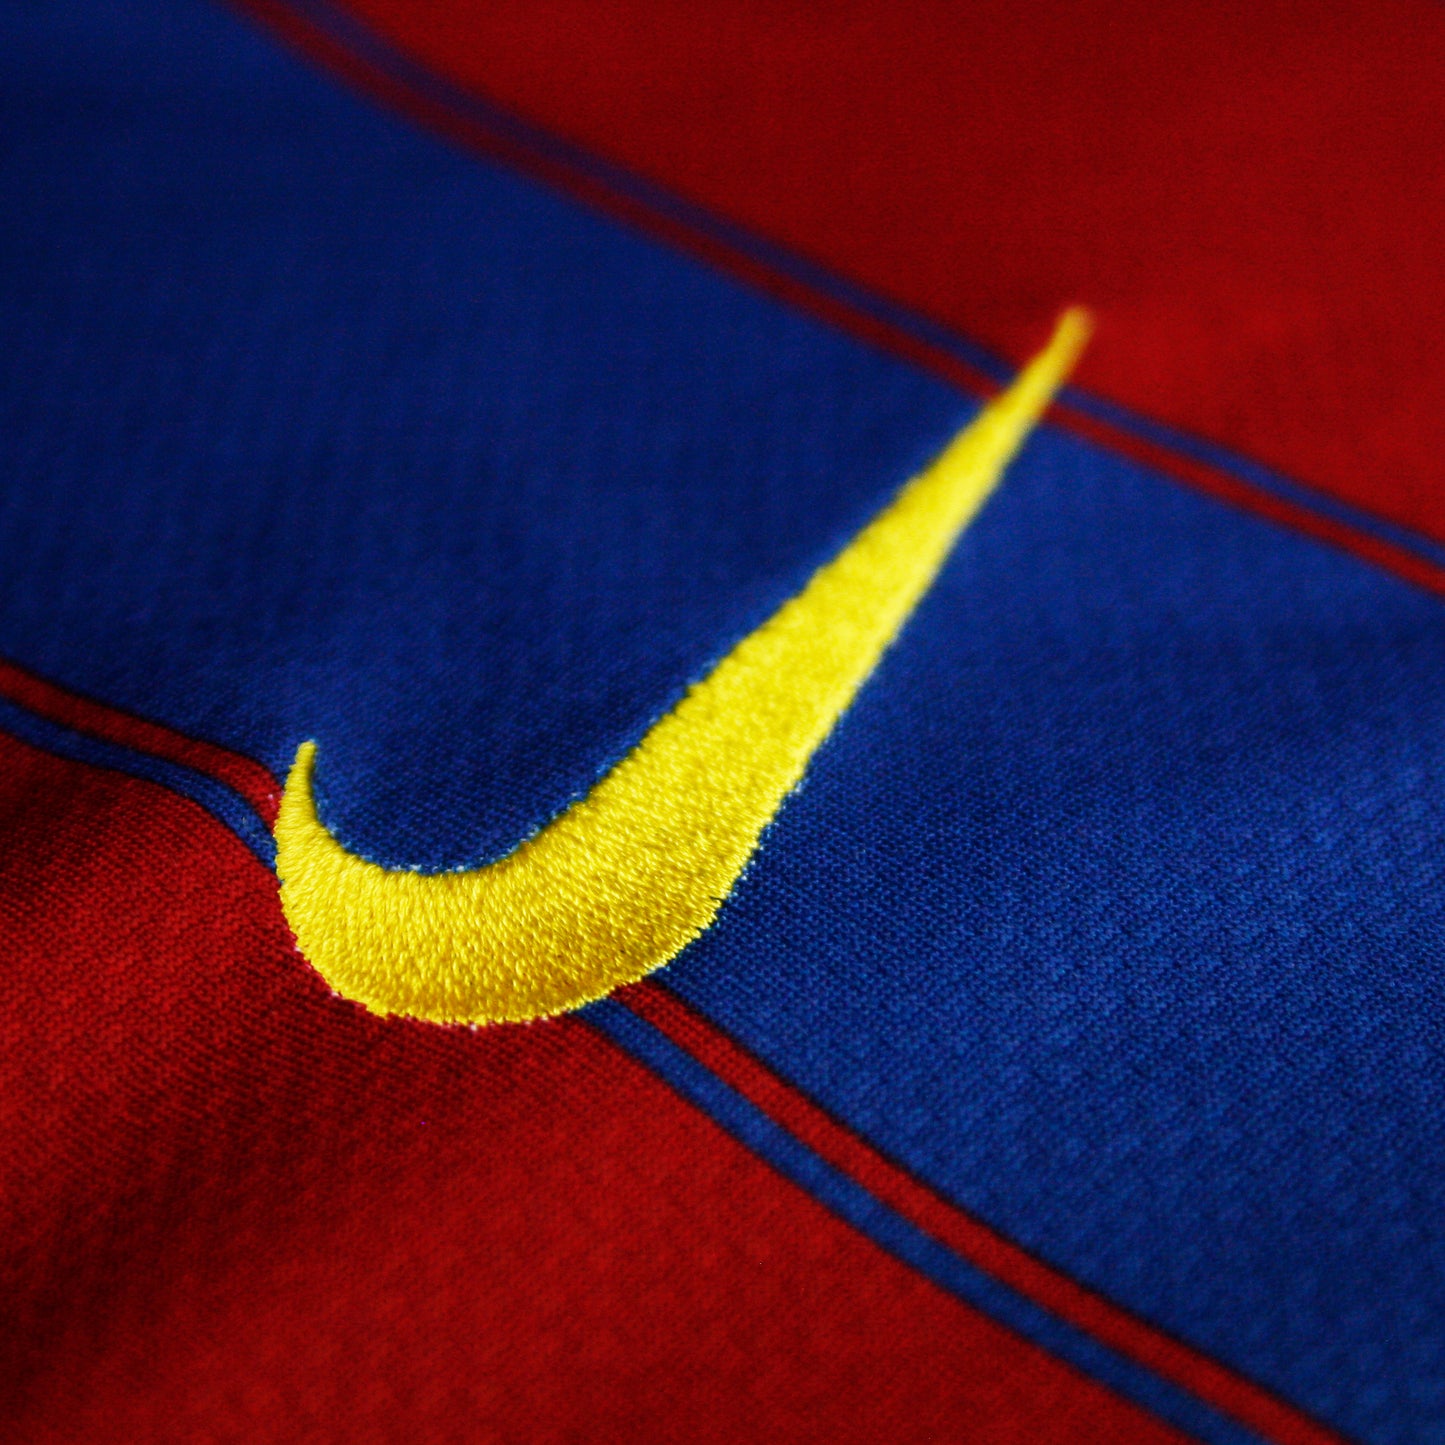 Barcelona 09/10 • Camiseta Local • M